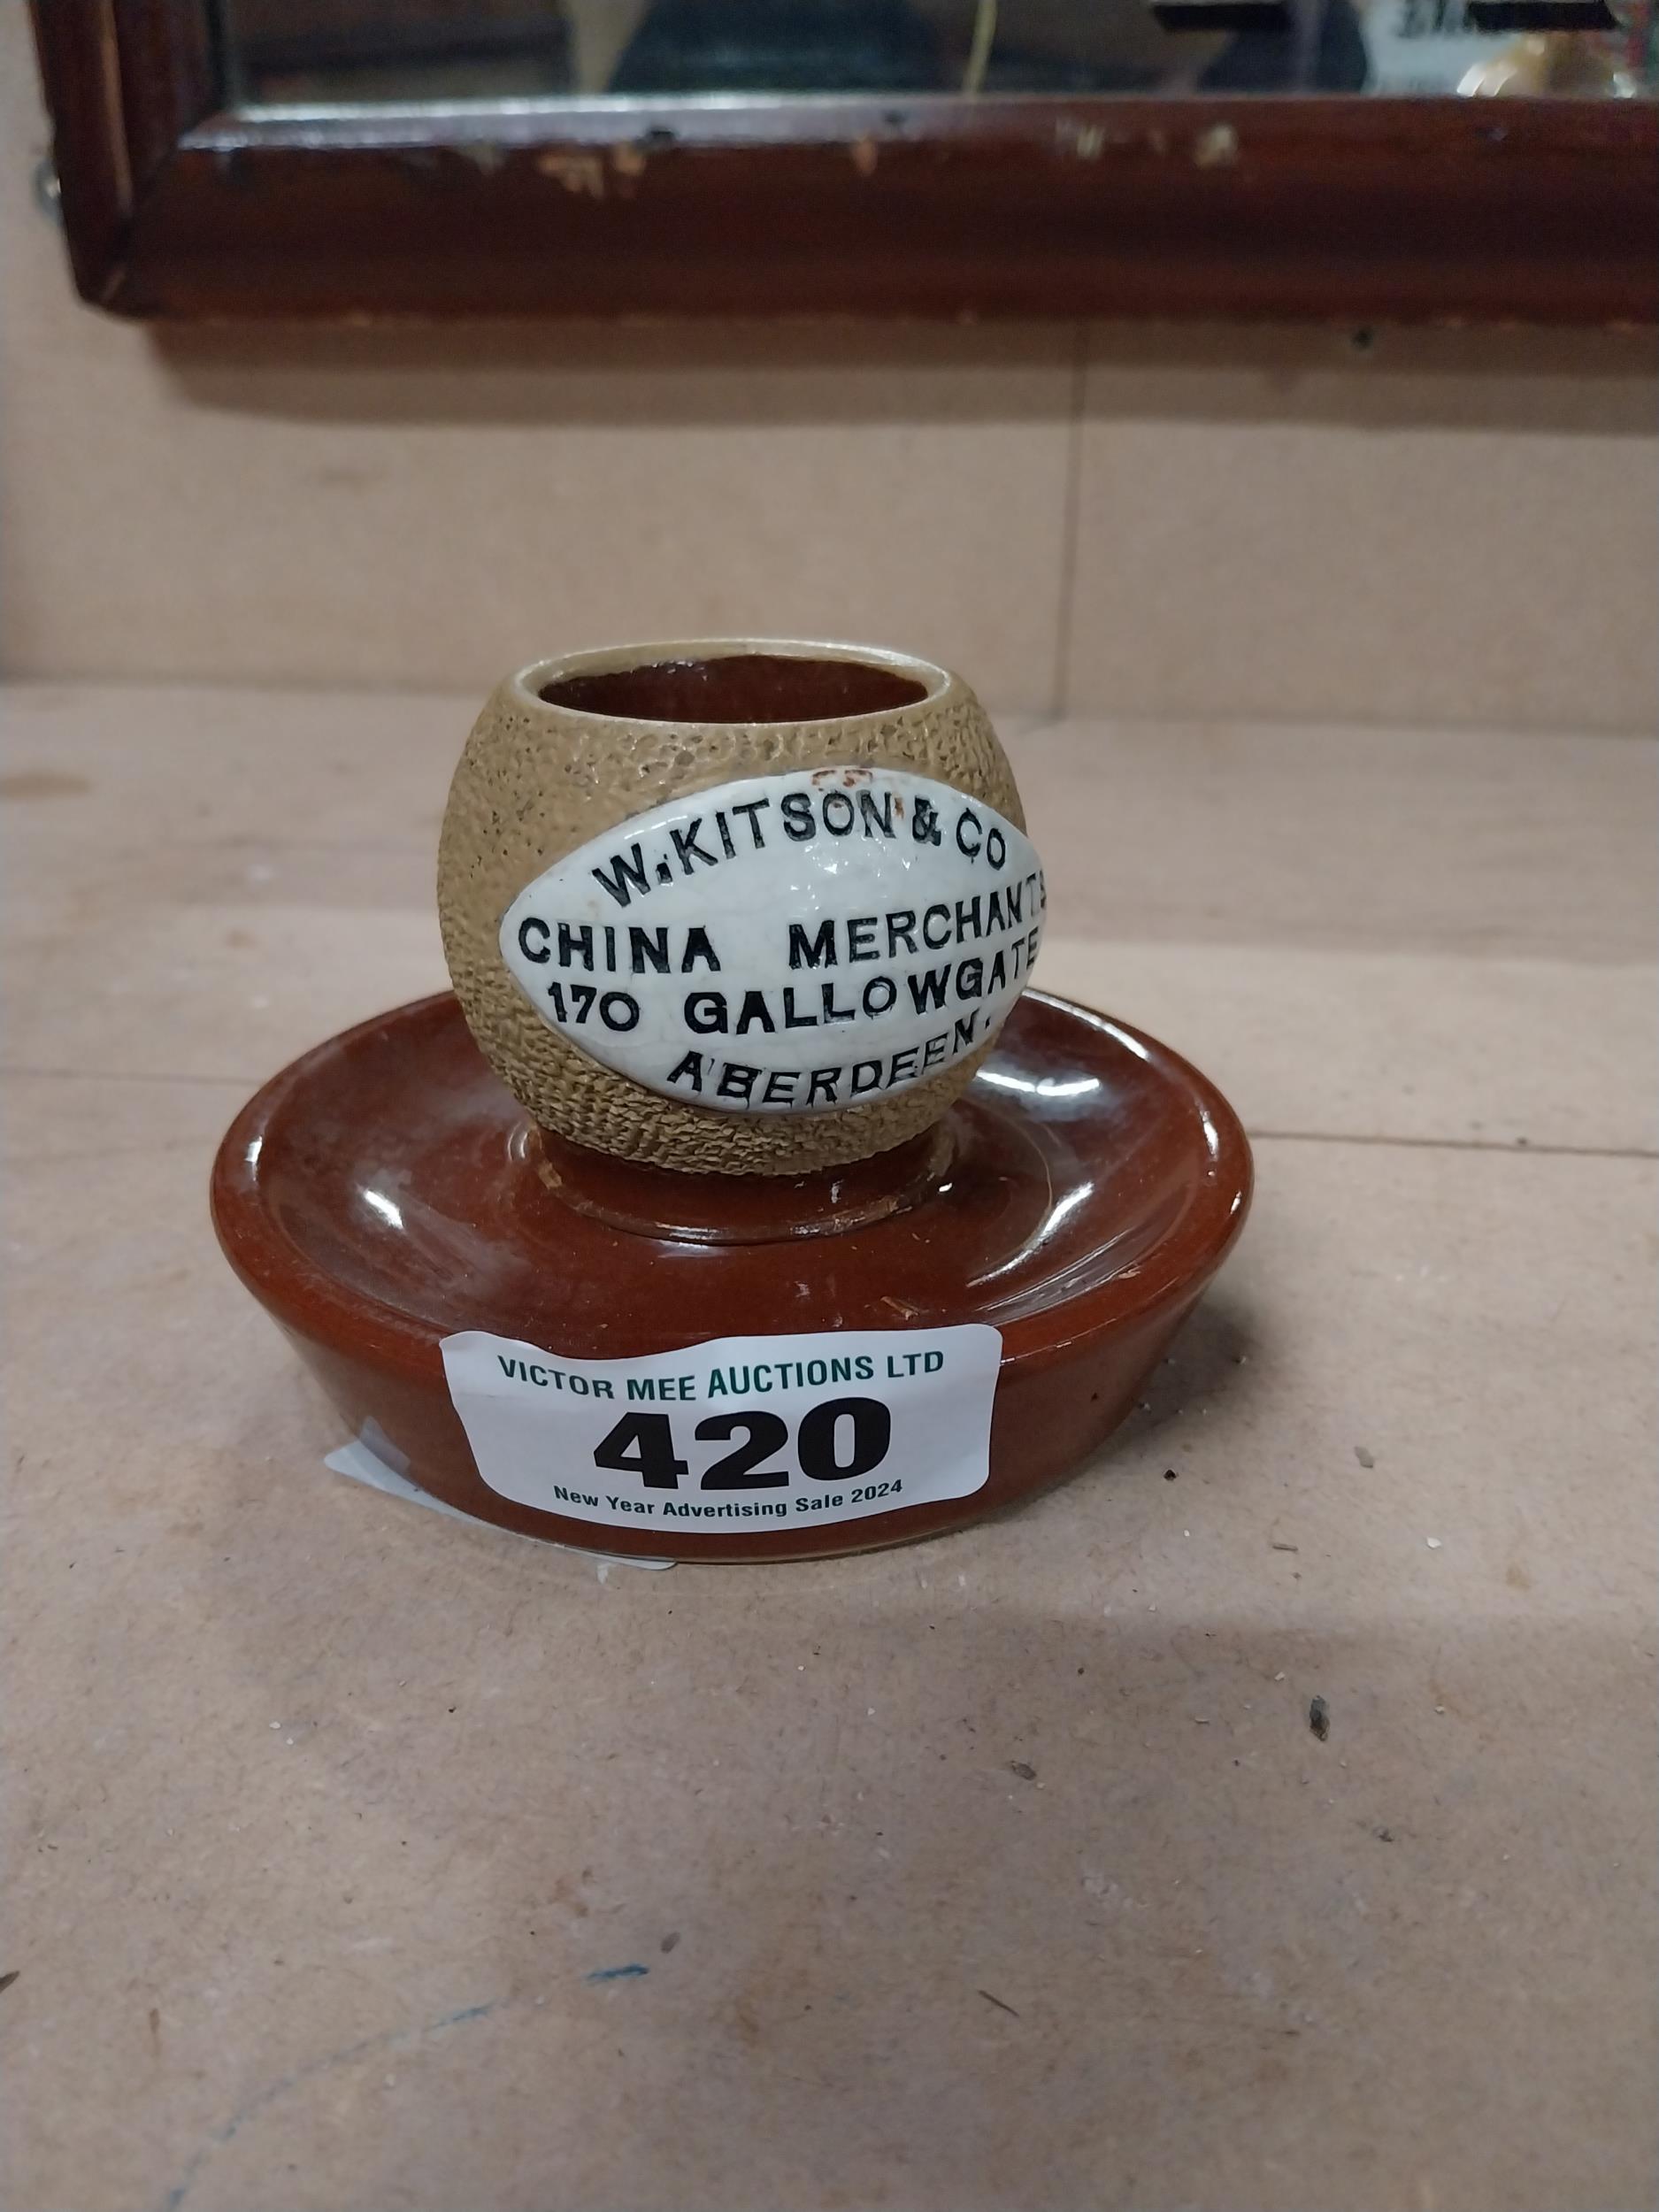 W Kitson and Co China Merchants Gallowgate Aberdeen ceramic match strike. {8 cm H x 10 cm Dia.} - Image 4 of 7